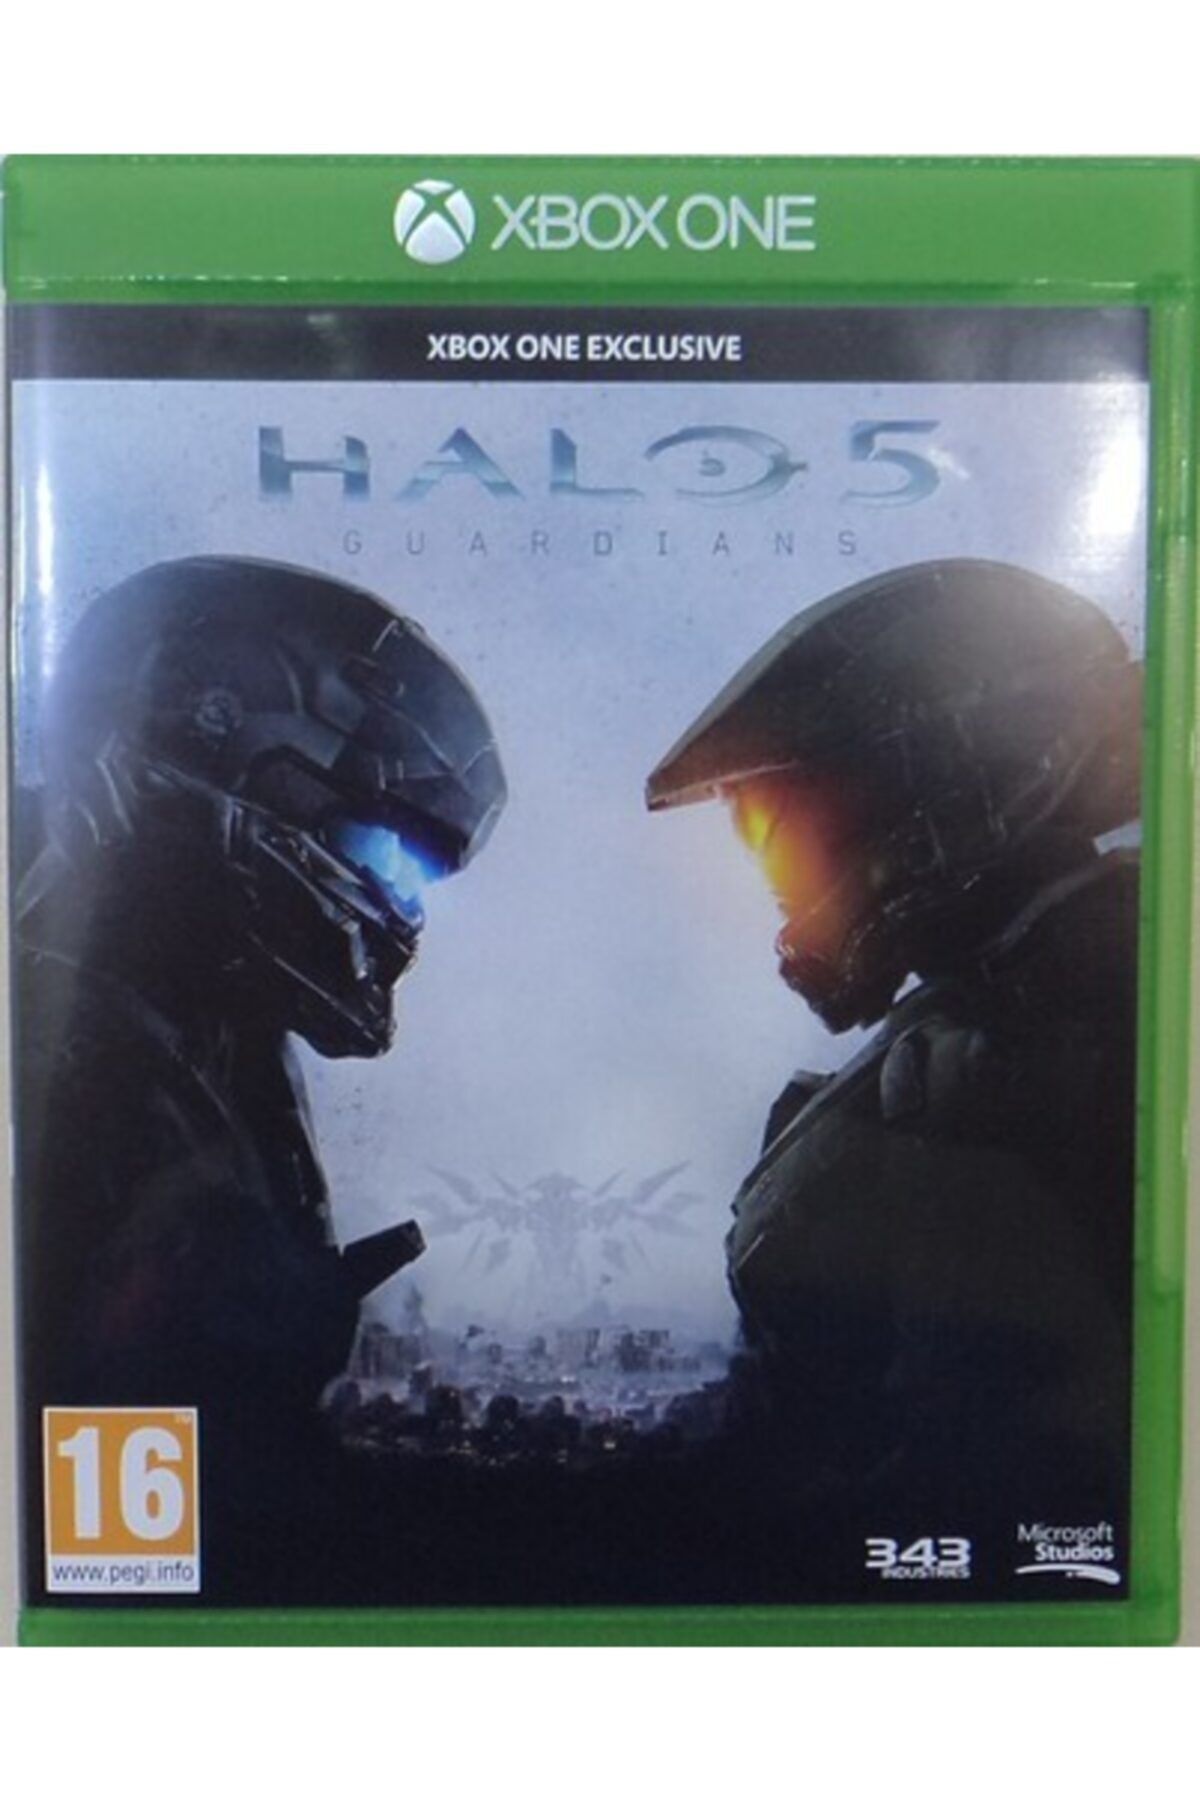 Microsoft Studios Halo 5 Guardians Xbox One